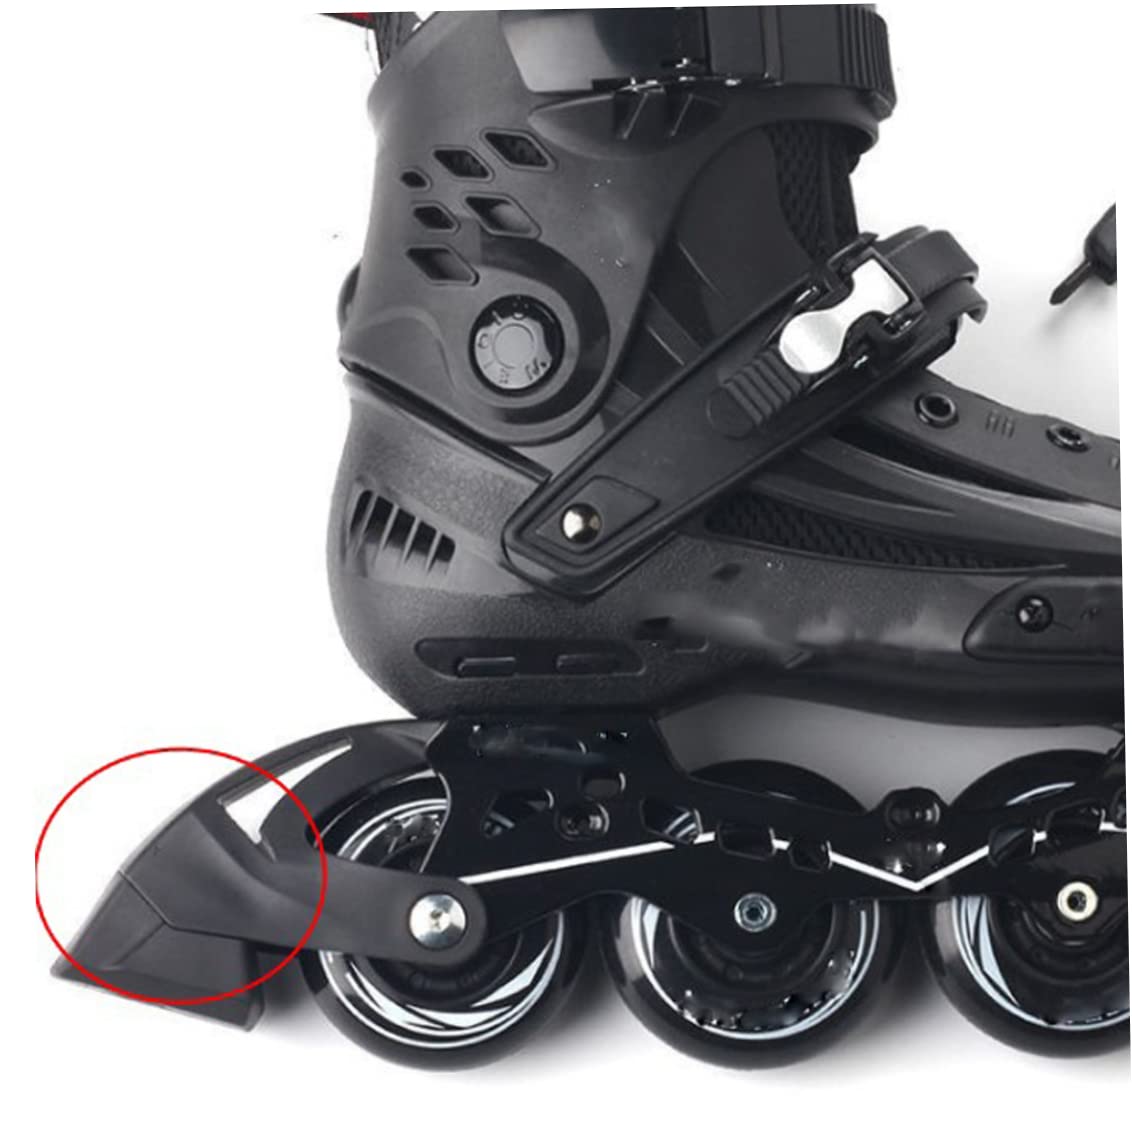 Mednkoku Standard Brake Pad Inline Skates,Universal Inline Skate Brake Stopper, Roller Skate Brakes Block Pad Skating Replacement Accessories - Black 1pc